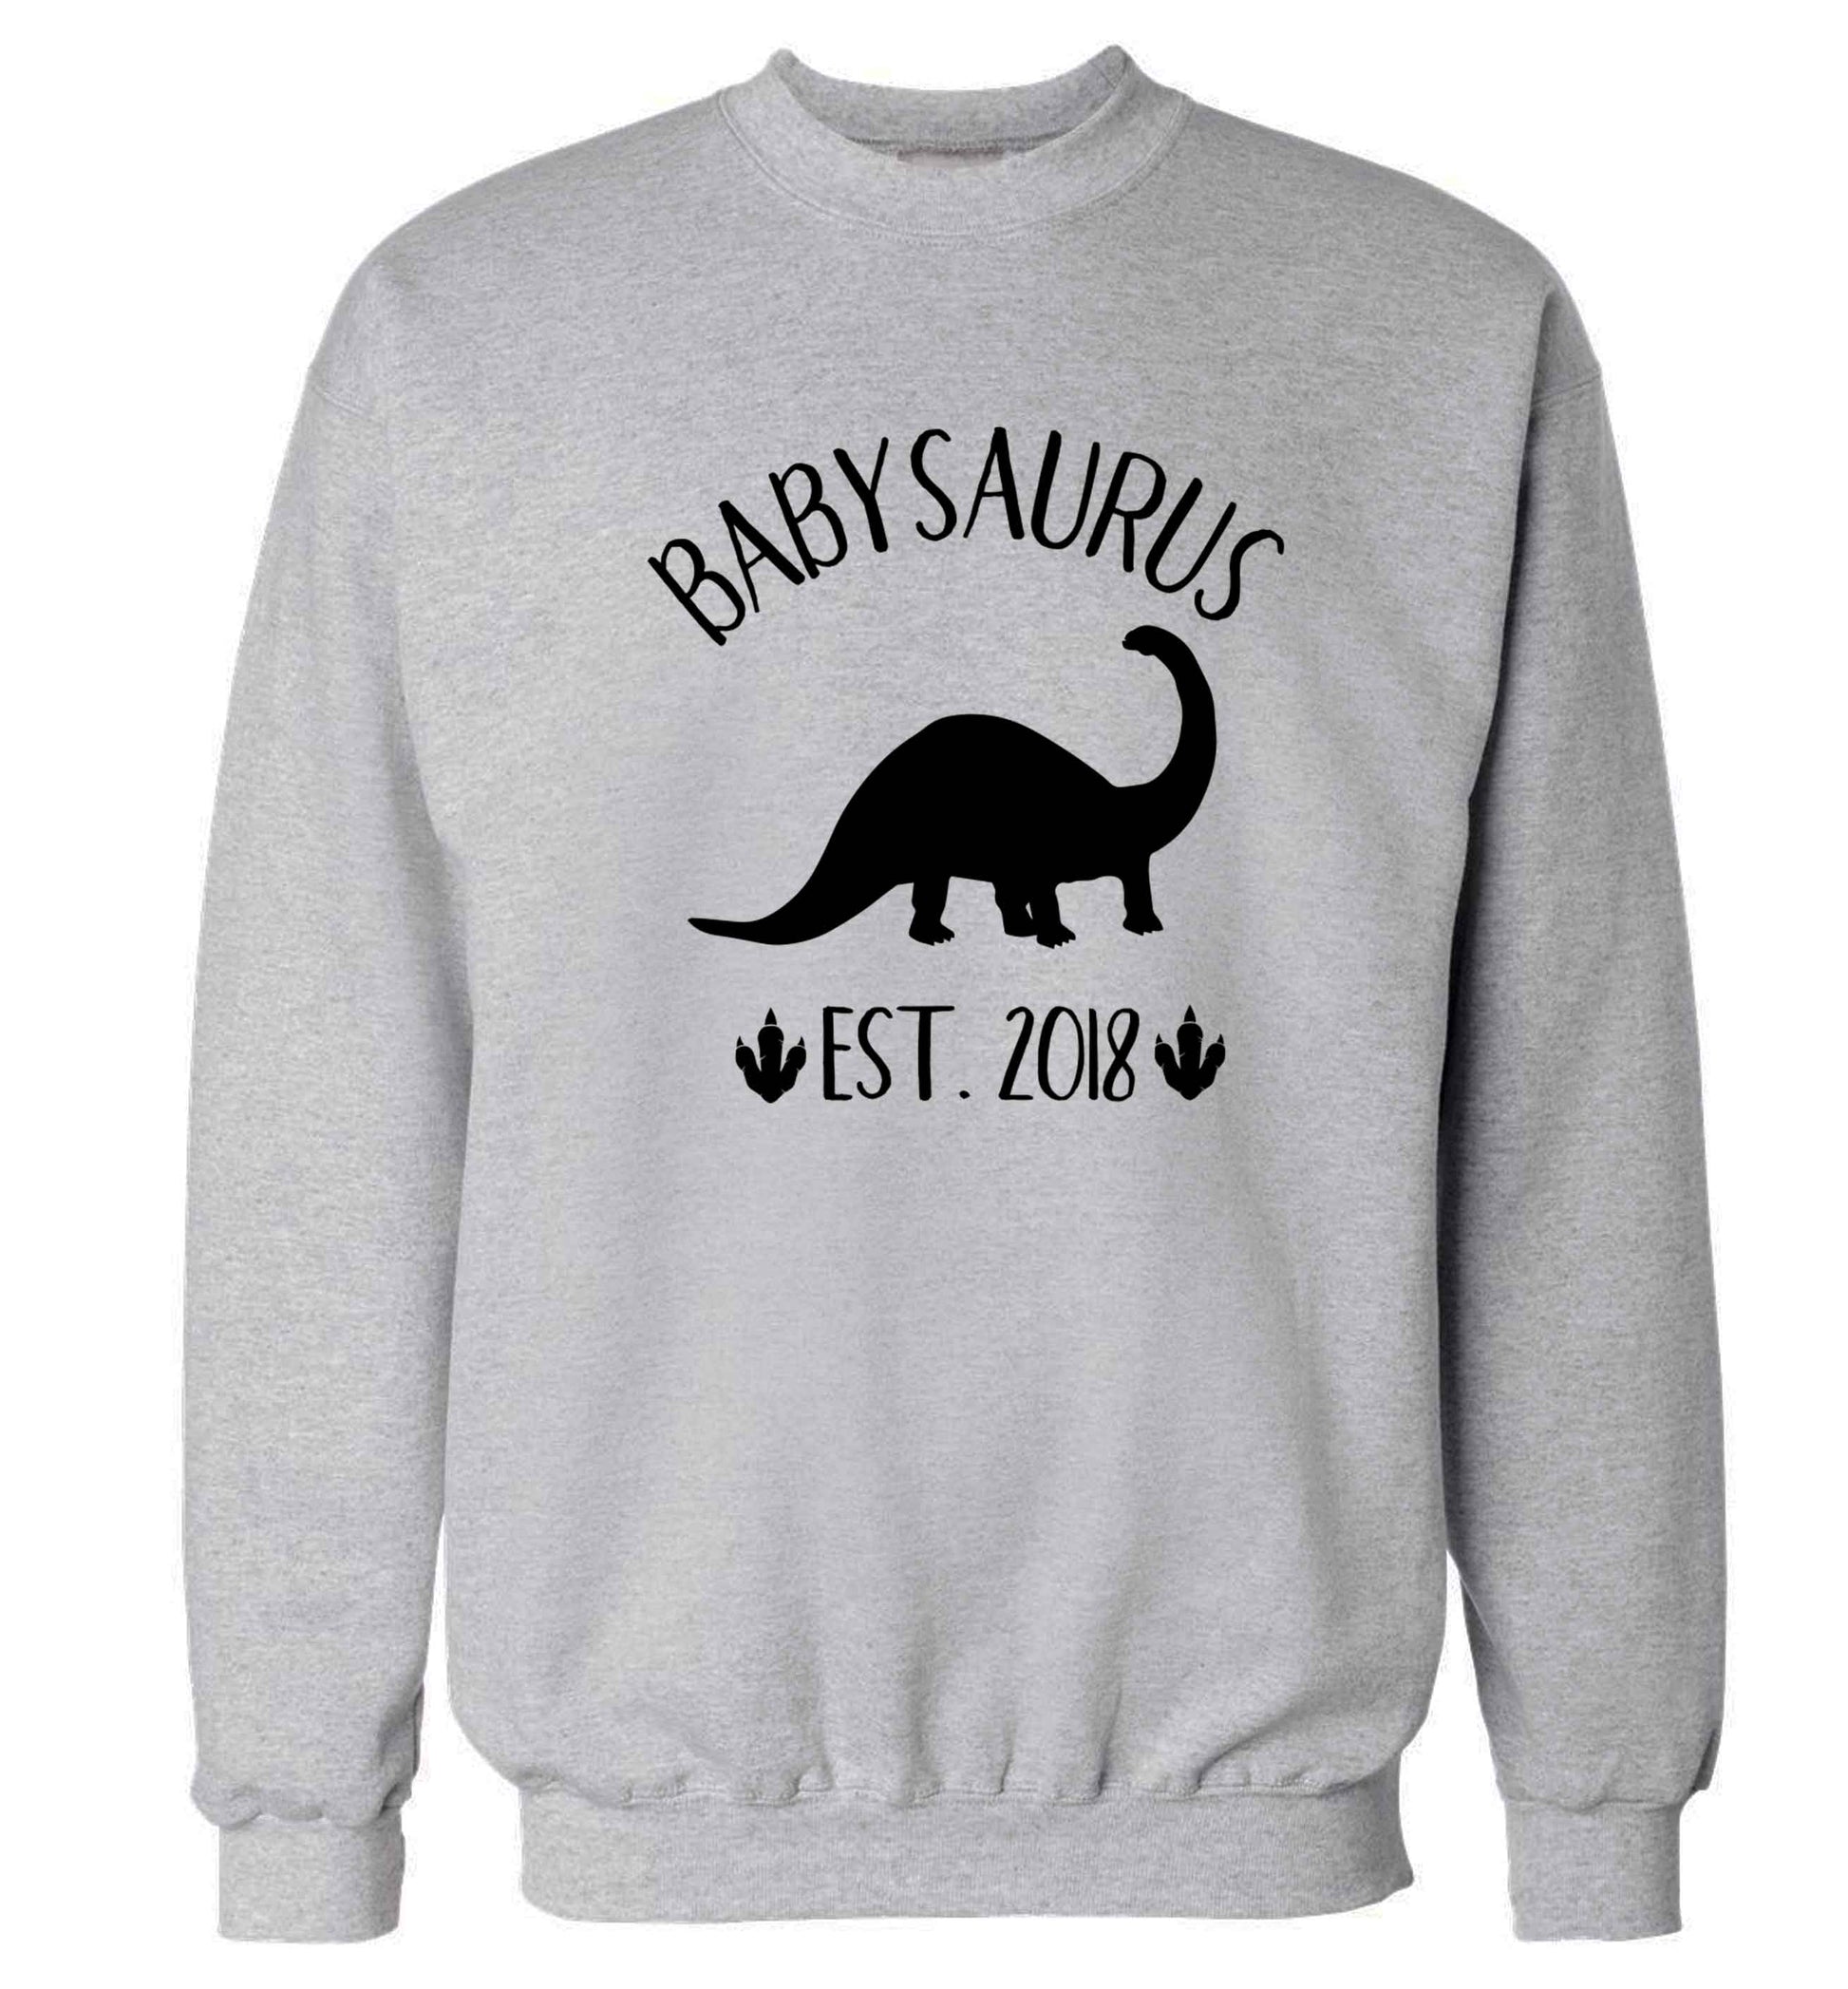 Personalised babysaurus since (custom date) Adult's unisex grey Sweater 2XL